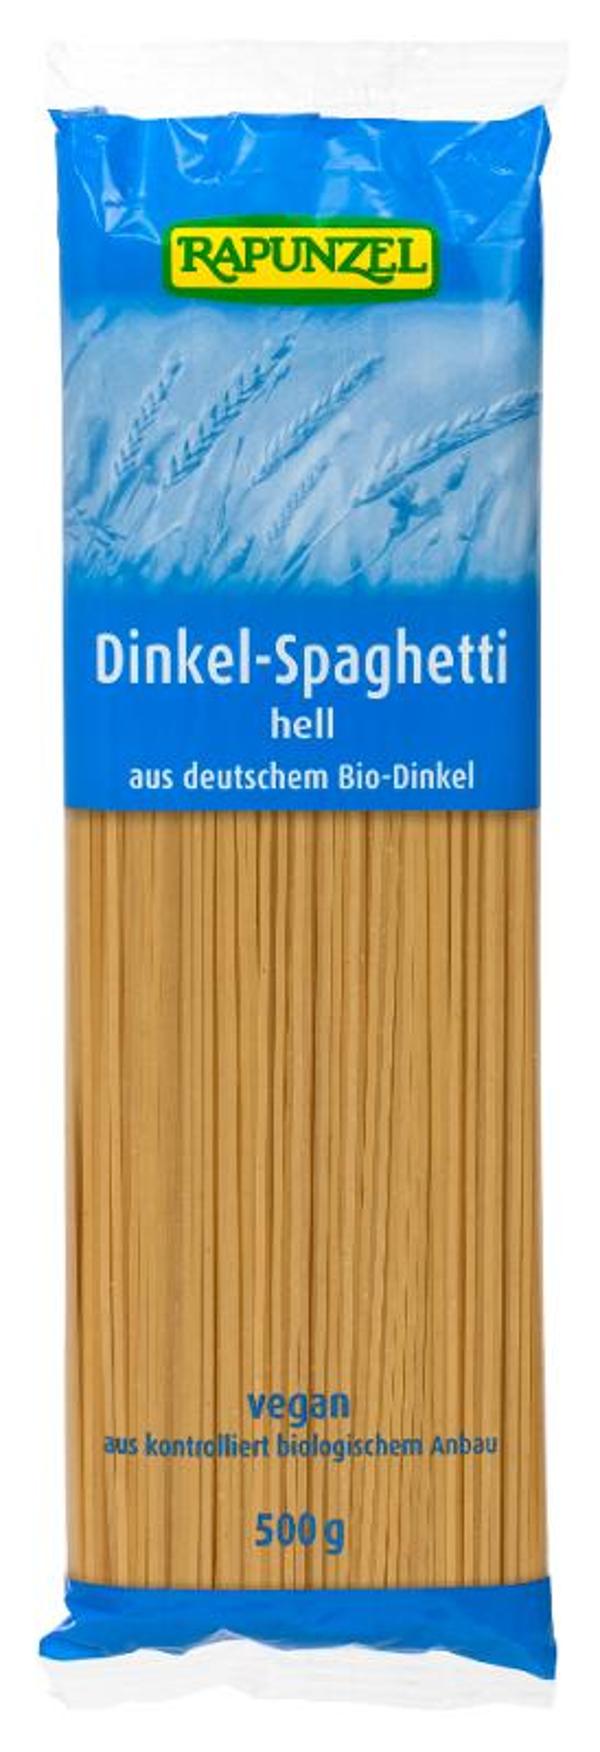 Produktfoto zu Dinkel-Spaghetti hell, 500 g